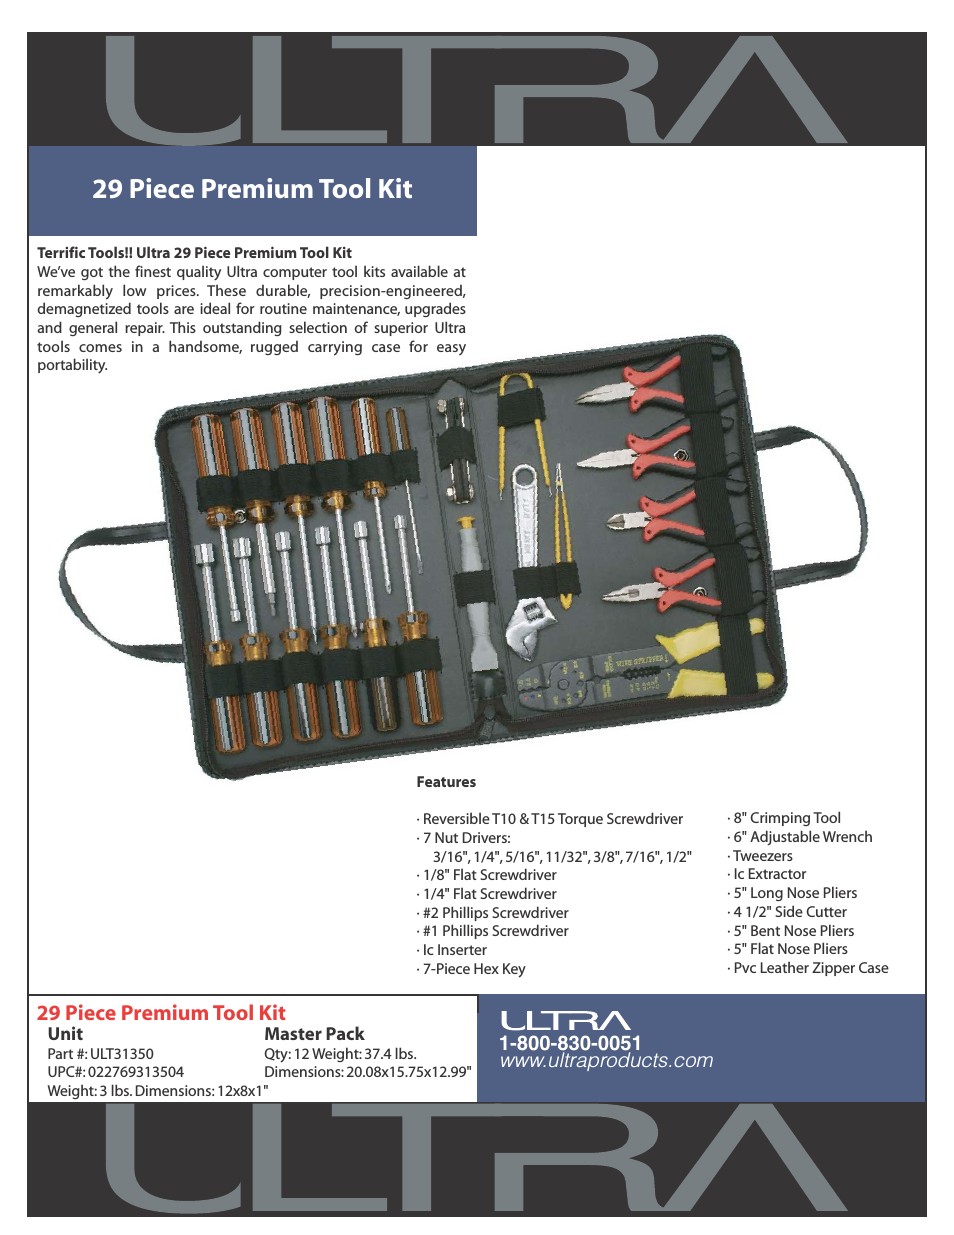 29 Piece Premium Tool Kit ULT31350